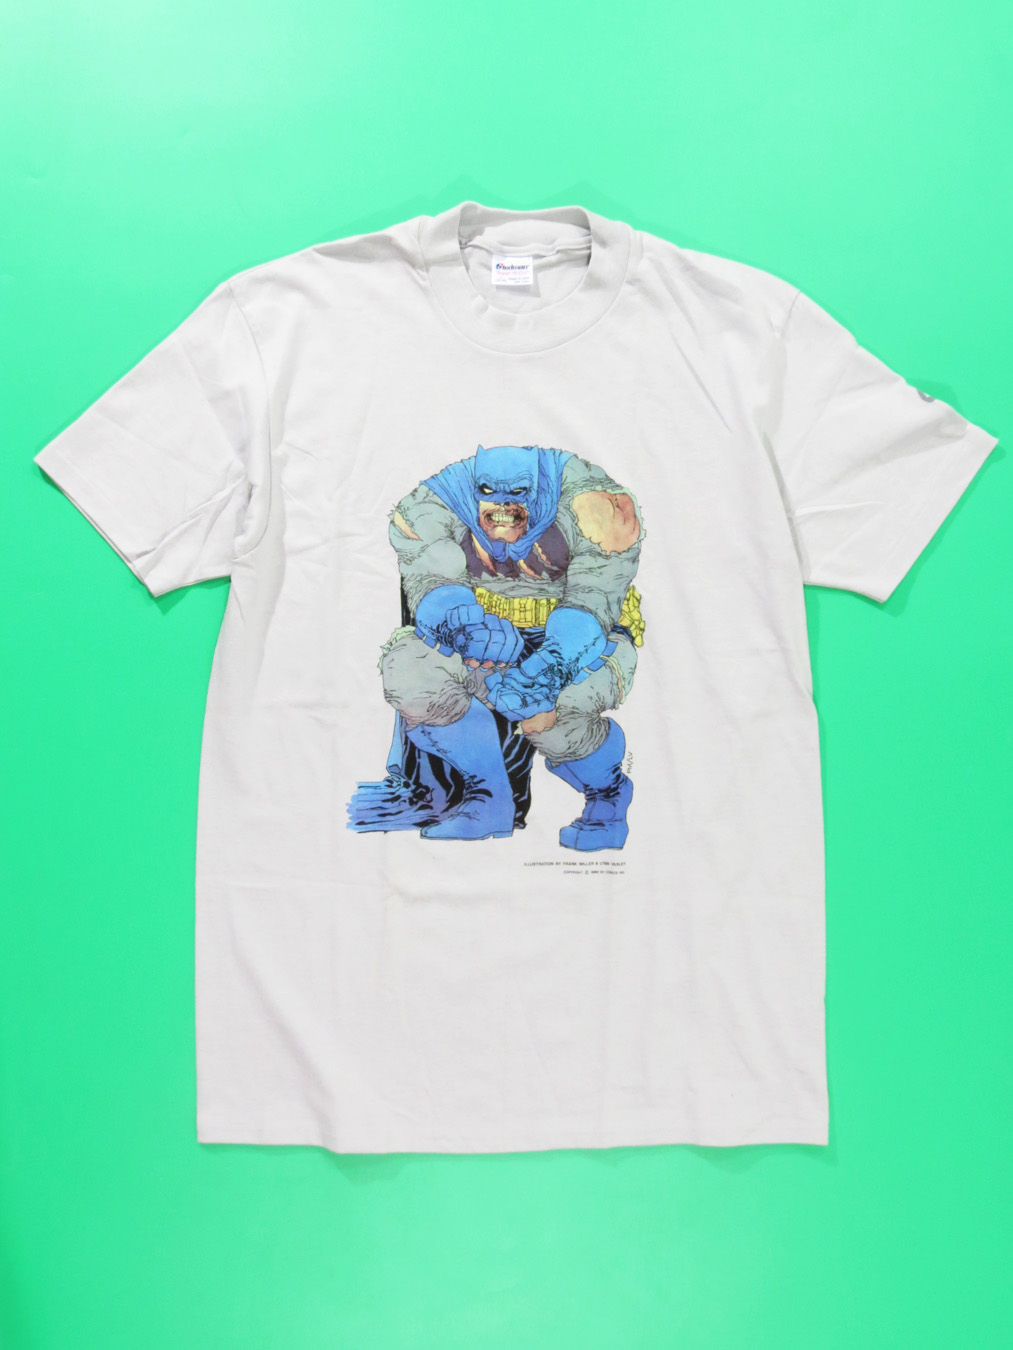 Batman DC Comics Baseball Jersey Shirt - Freedomdesign